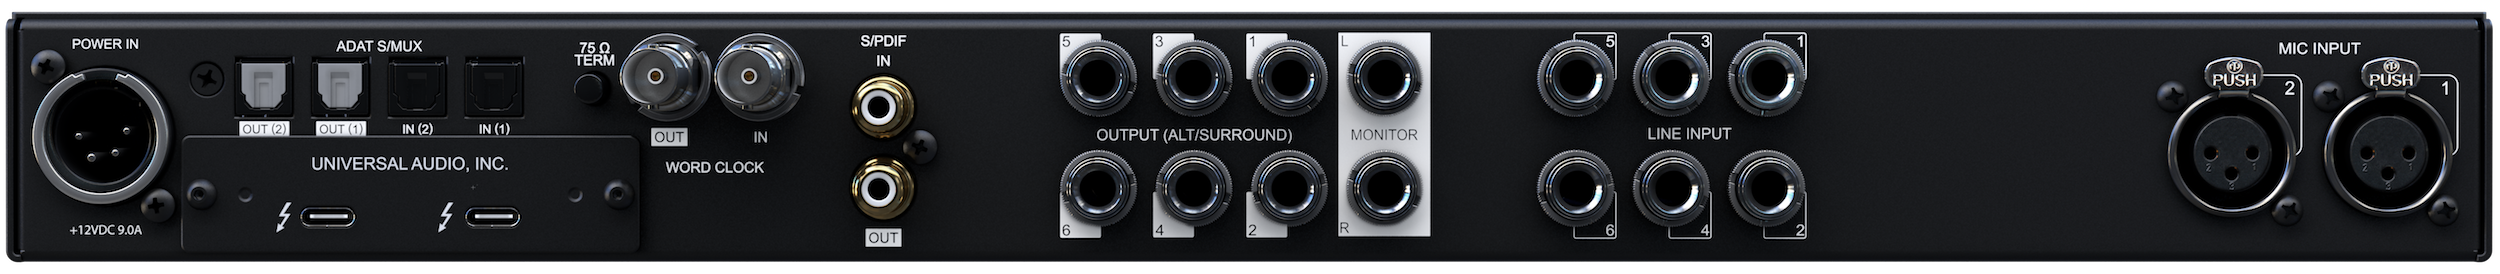 Universal Audio Apollo X6 - Thunderbolt audio interface - Variation 2